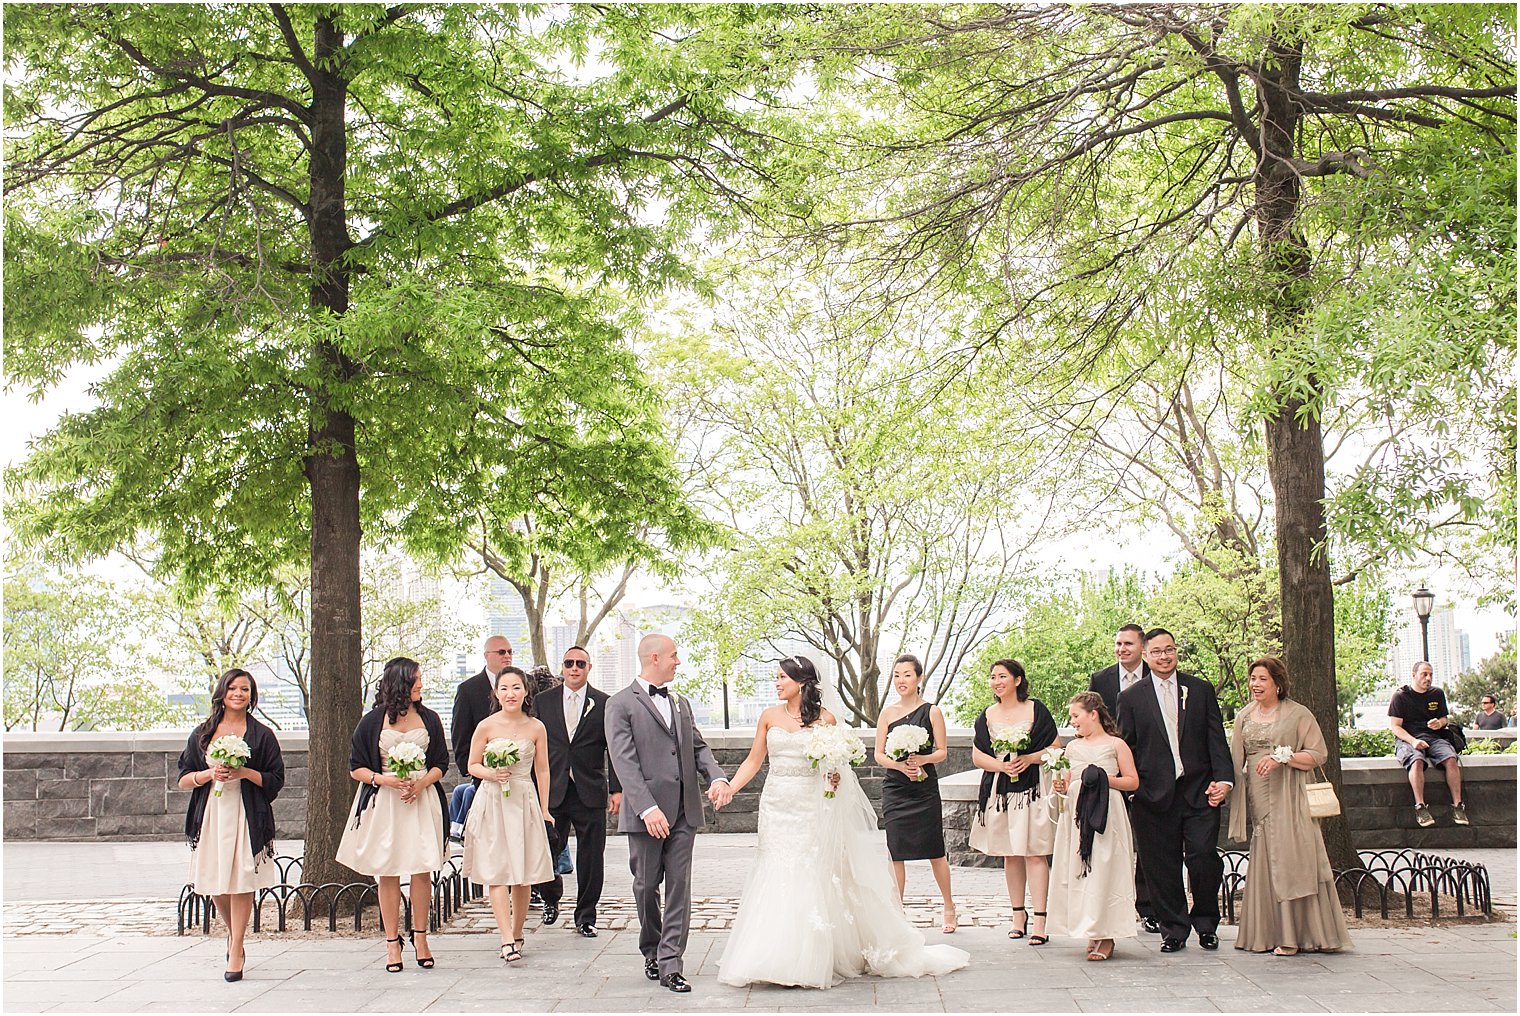 Photo of bridal party walking in NYC wedding | Photo by Idalia Photography